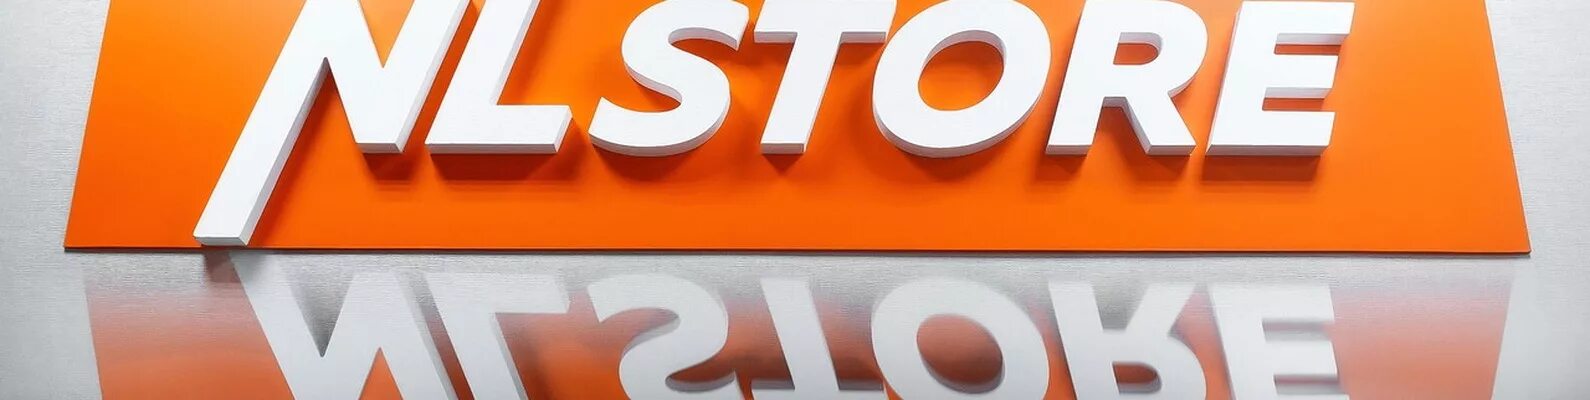 Nlstore com. Магазин nl Store. Nl Store логотип. Nl Store Пенза. Nl Store для андроид.